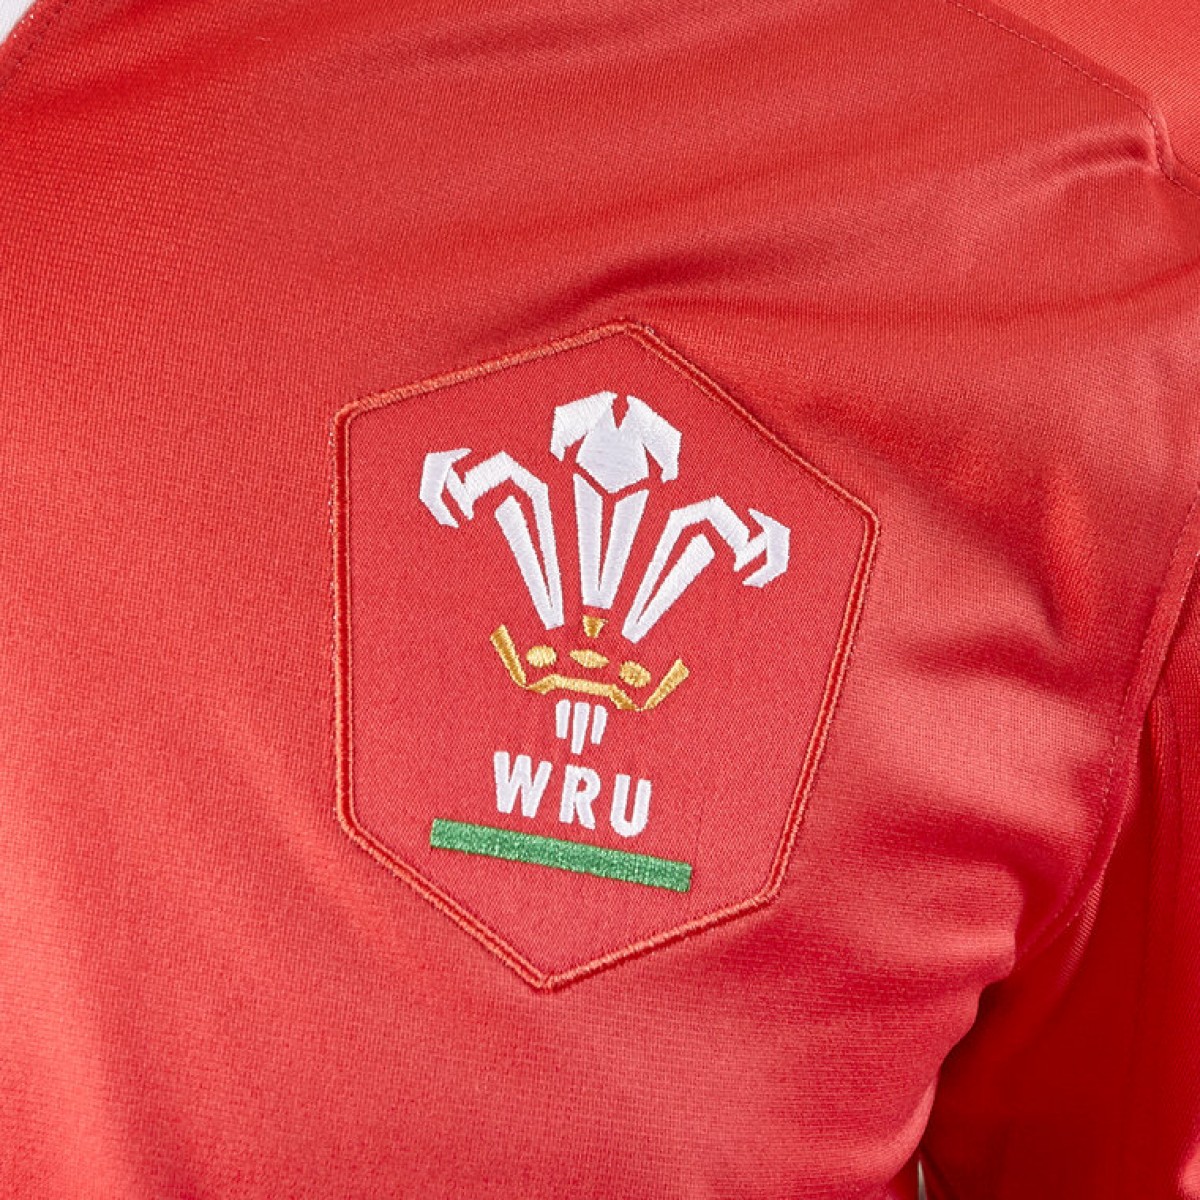 Under Armour WRU Wales Presentation Jacket 2019/2020 Rugby 